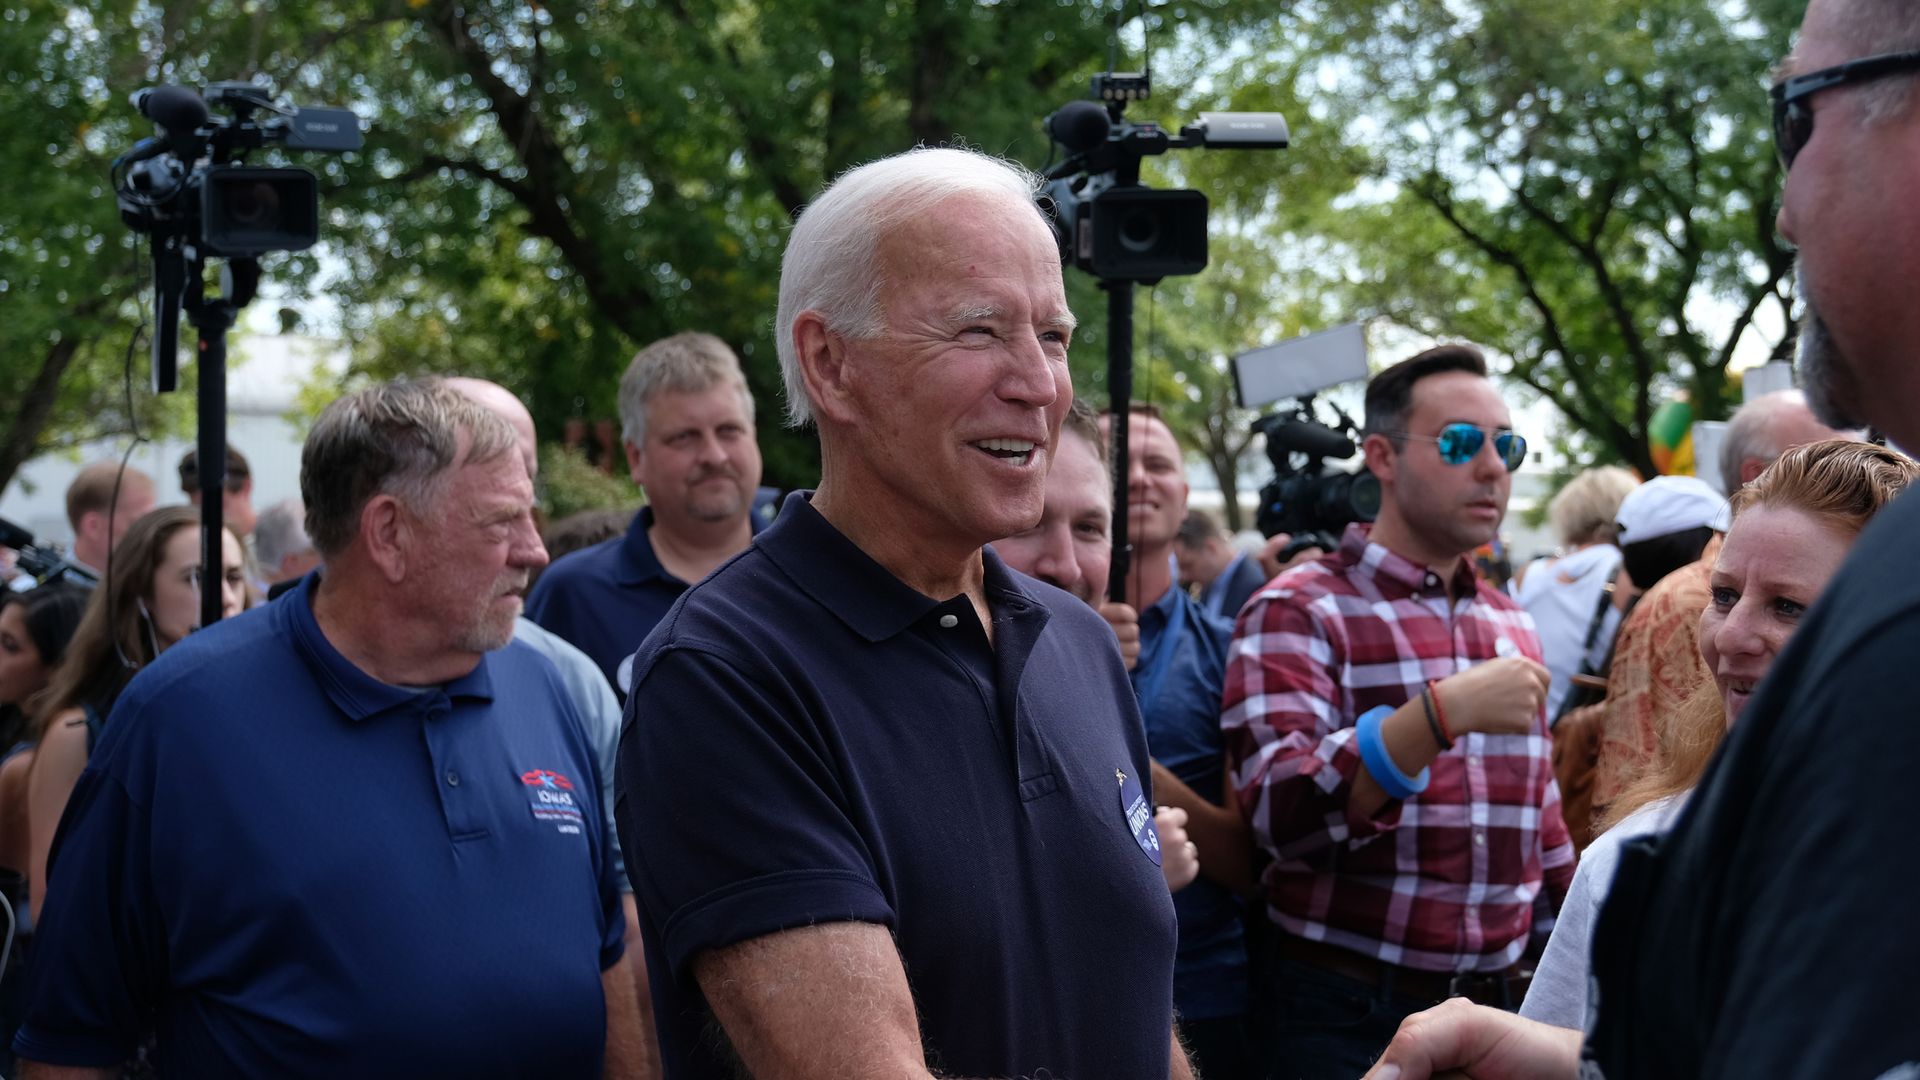 Former Vice President and 2020 hopeful Joe Biden campaigning in Iowa